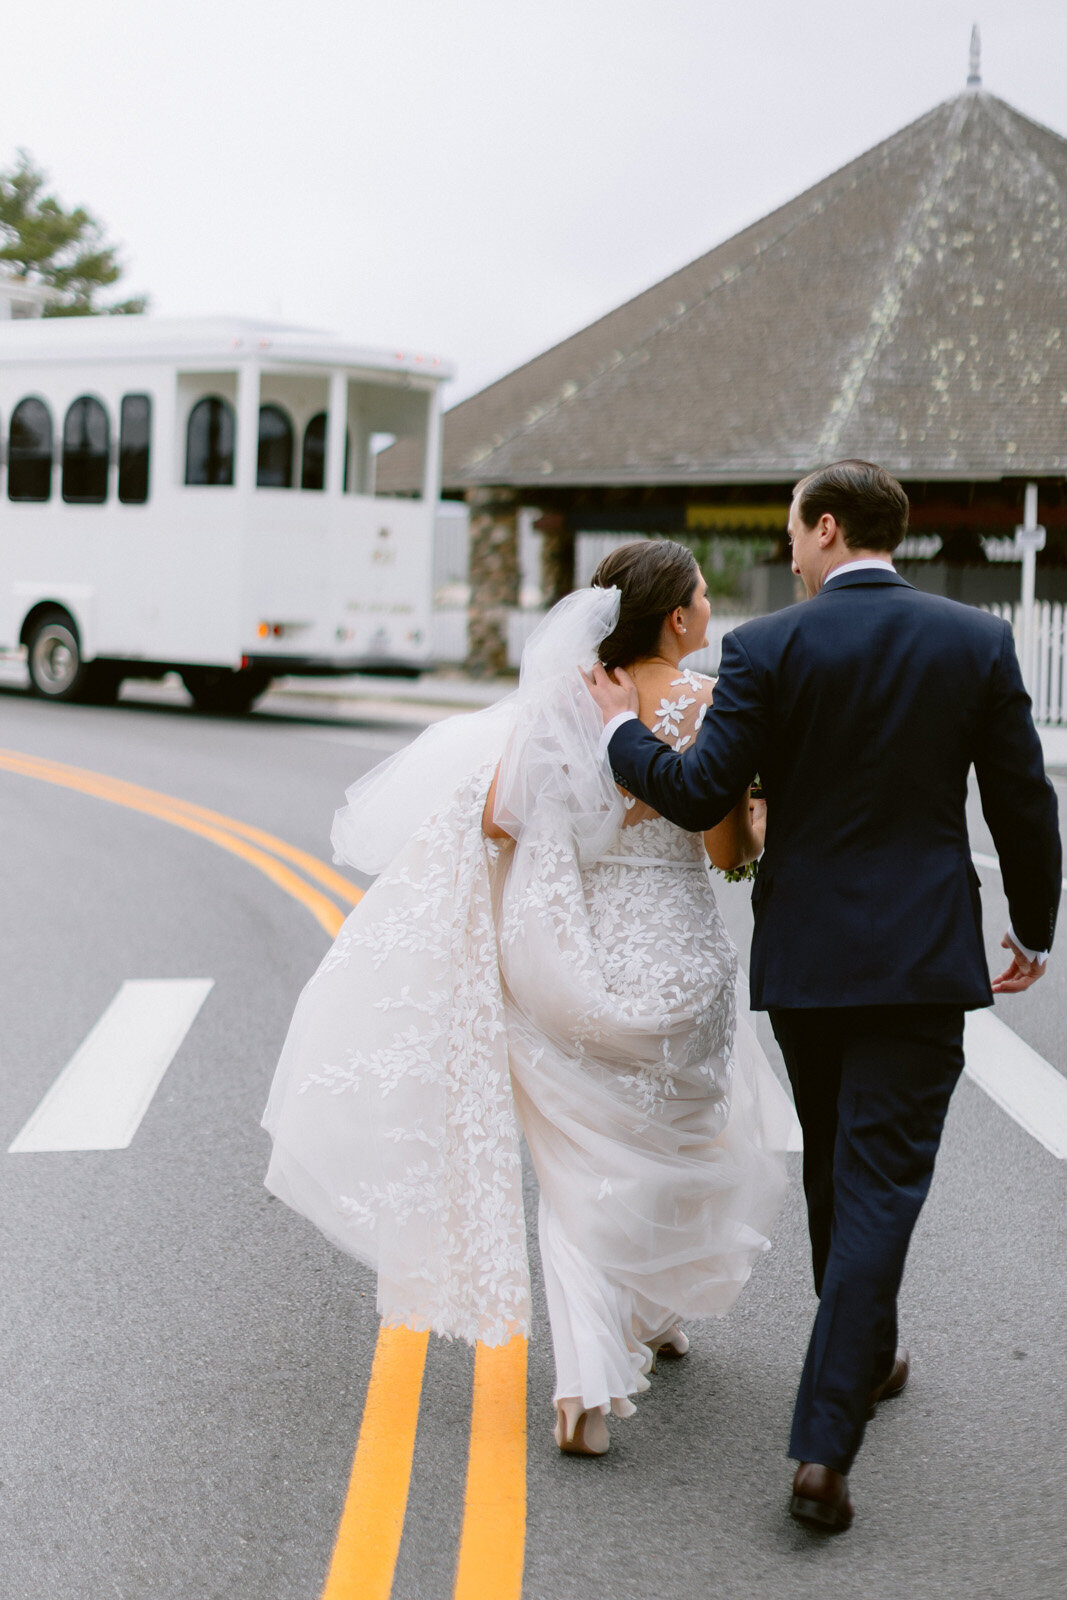 Kate-Murtaugh-Events-Watch-Hill-Carousel-wedding-bride-groom-trolley